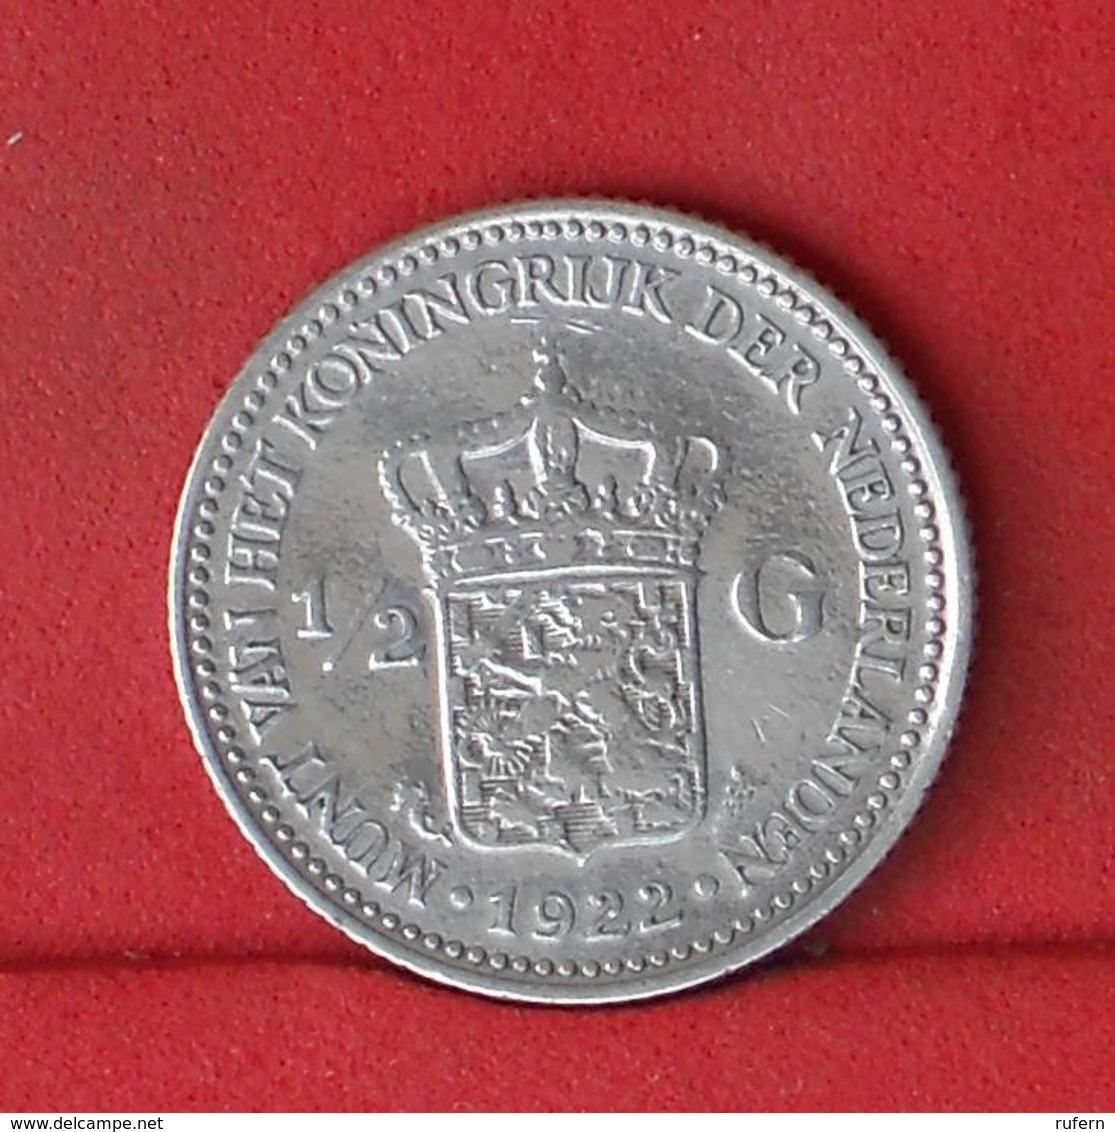 NETHERLANDS 1/2 GULDEN 1922 - *SILVER*   KM# 160 - (Nº32112) - 1/2 Gulden